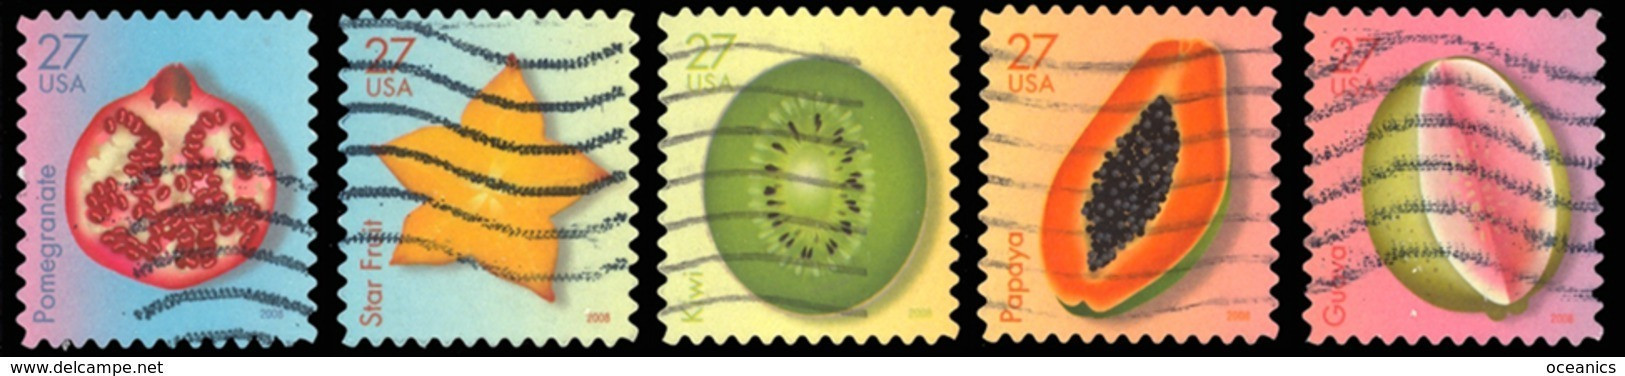 Etats-Unis / United States (Scott No.4253-57 - Fruits Tropicaux / Tropical Fruits) (o) - Used Stamps